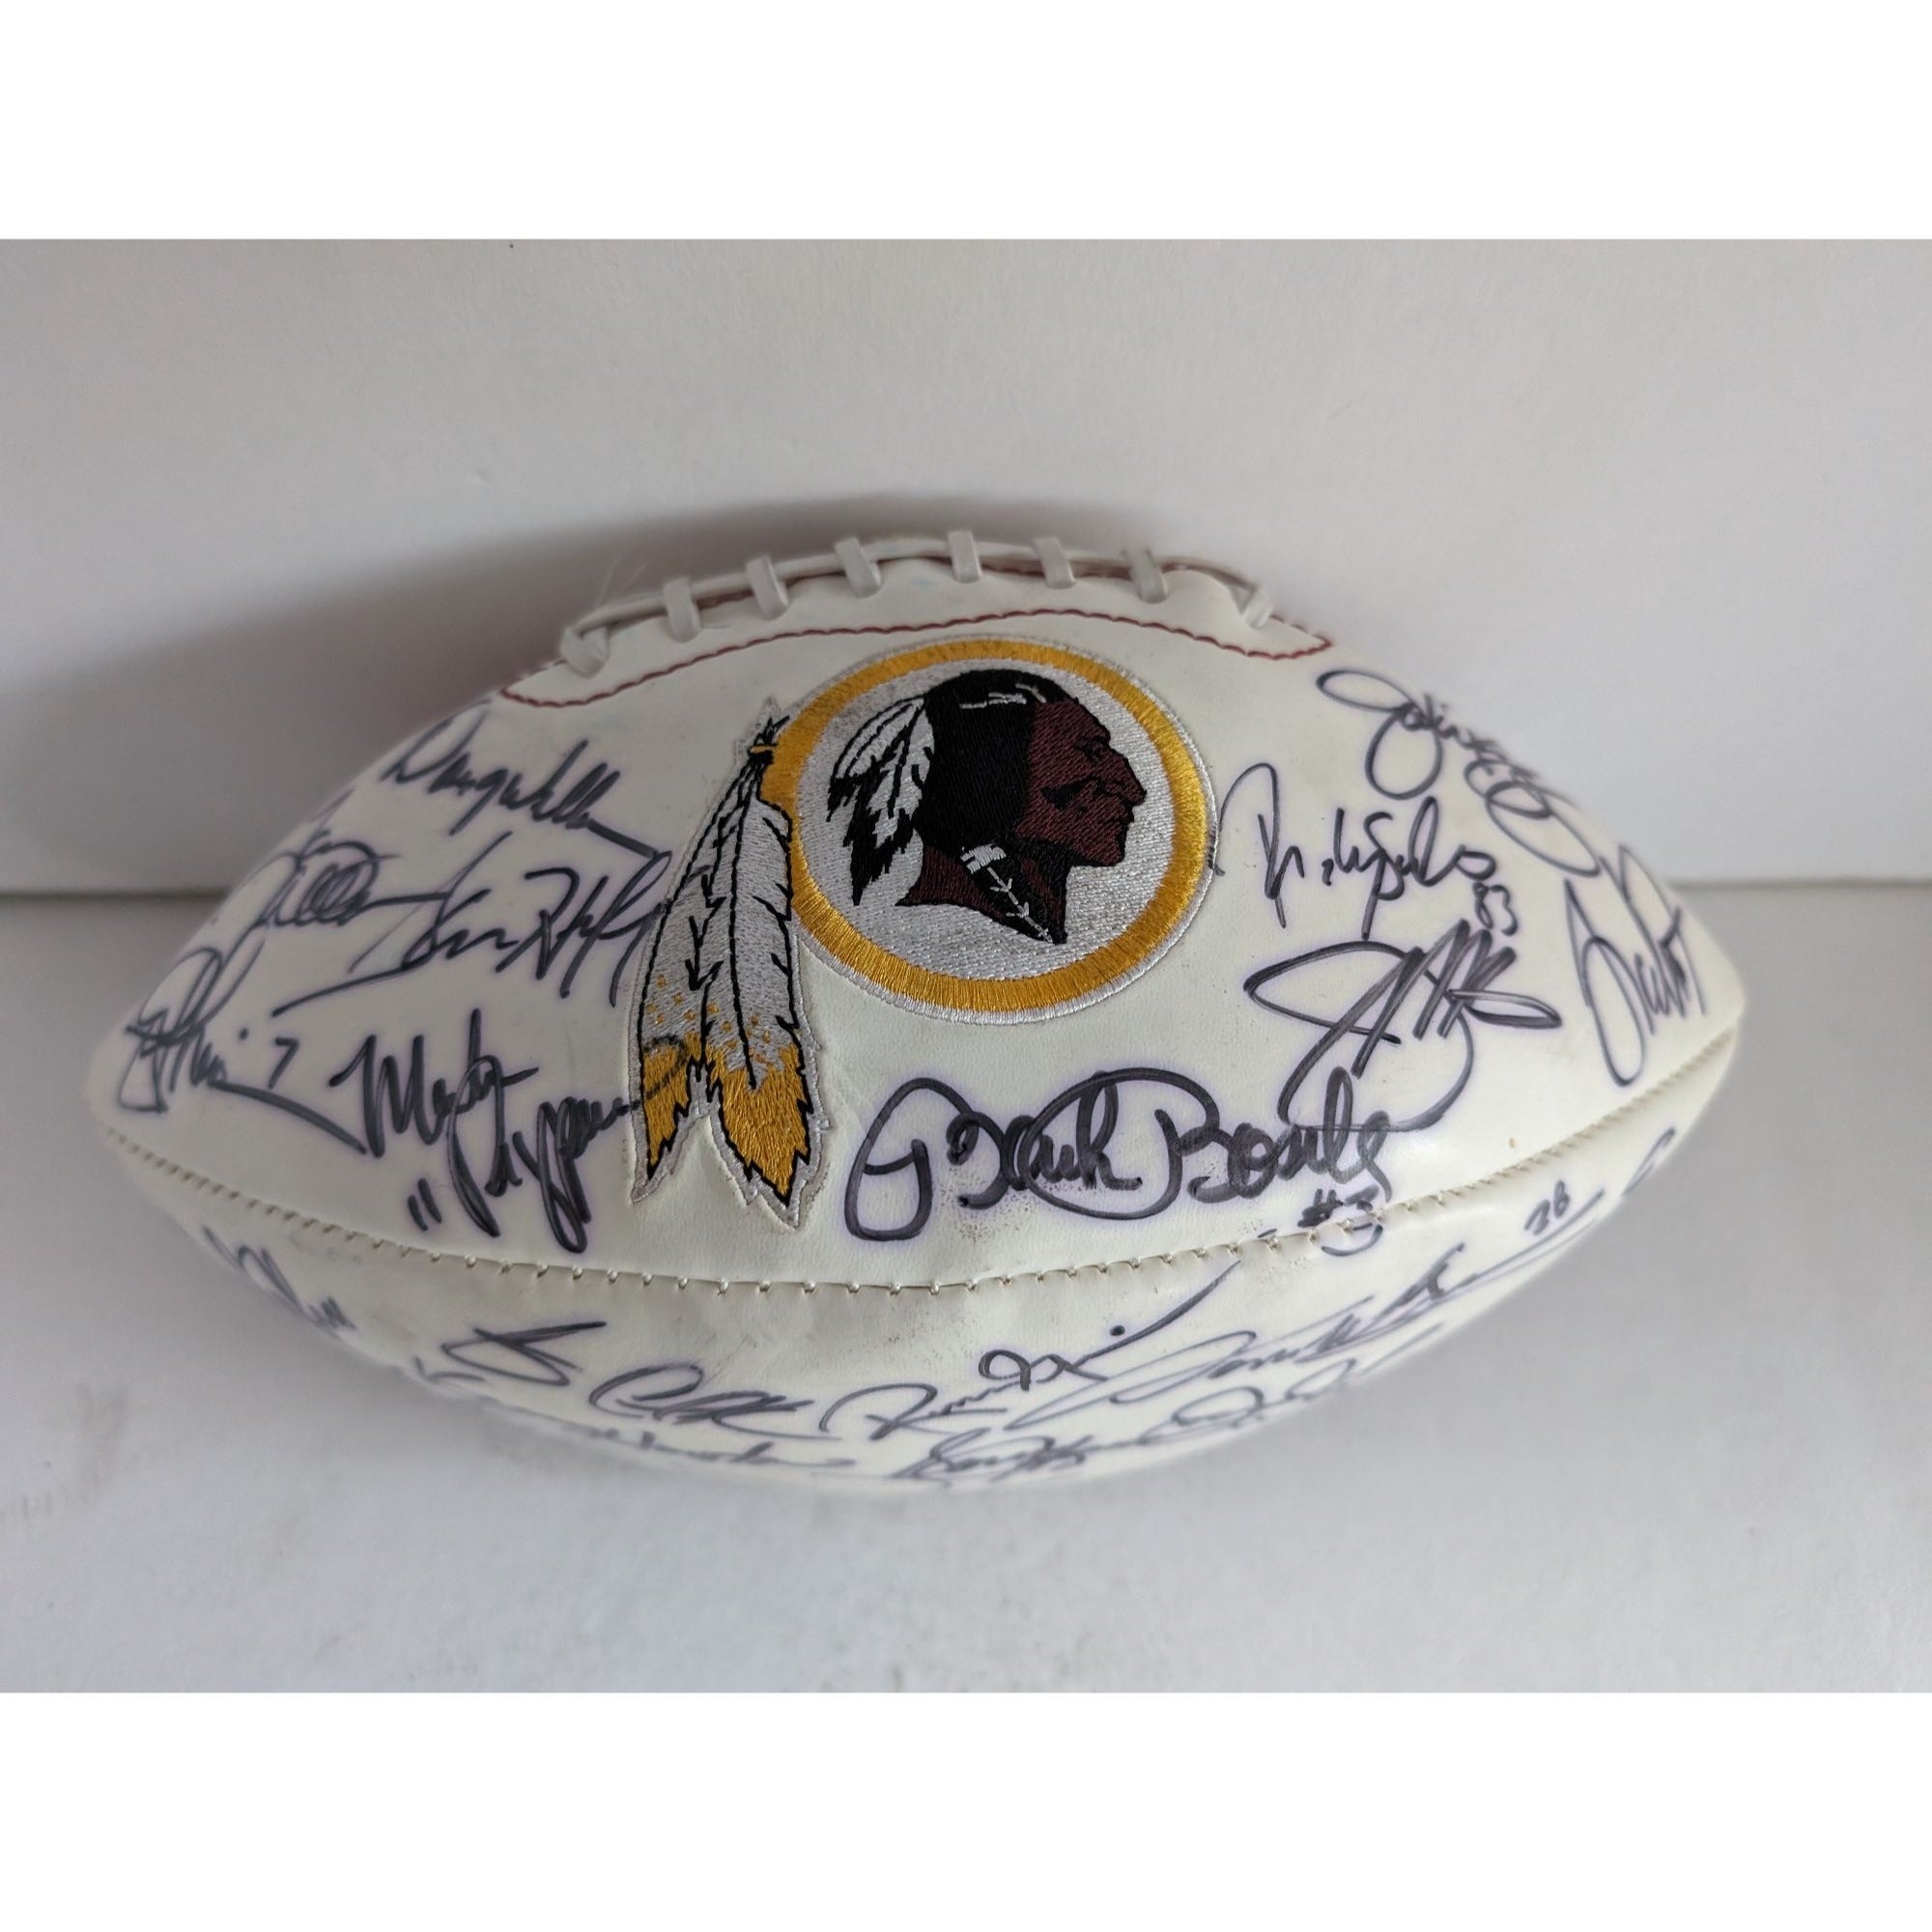 Washington Redskins John Riggins Doug Williams Sam Huff Joe Gibbs Art Monk 22 all-time greats signed football